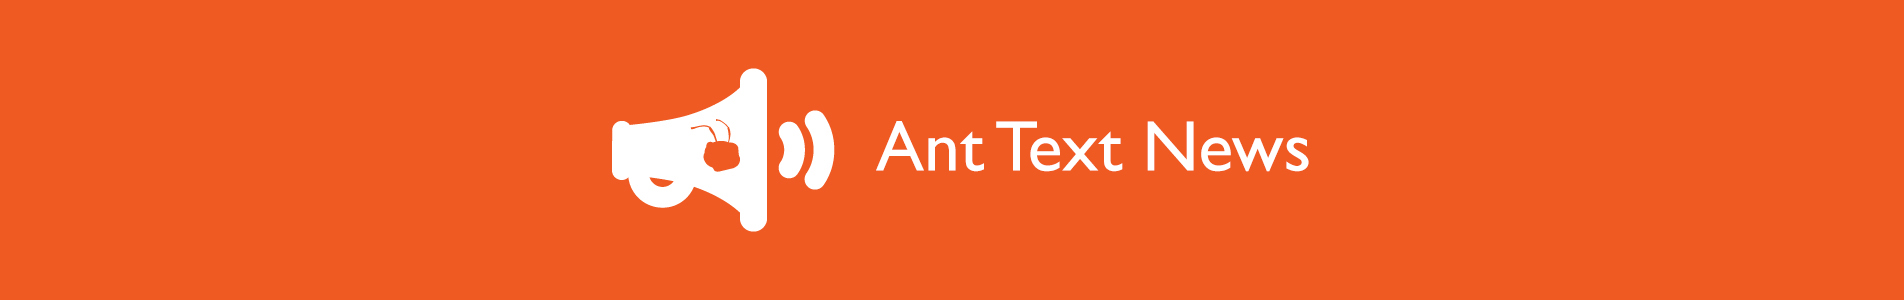 Header Ant Text news